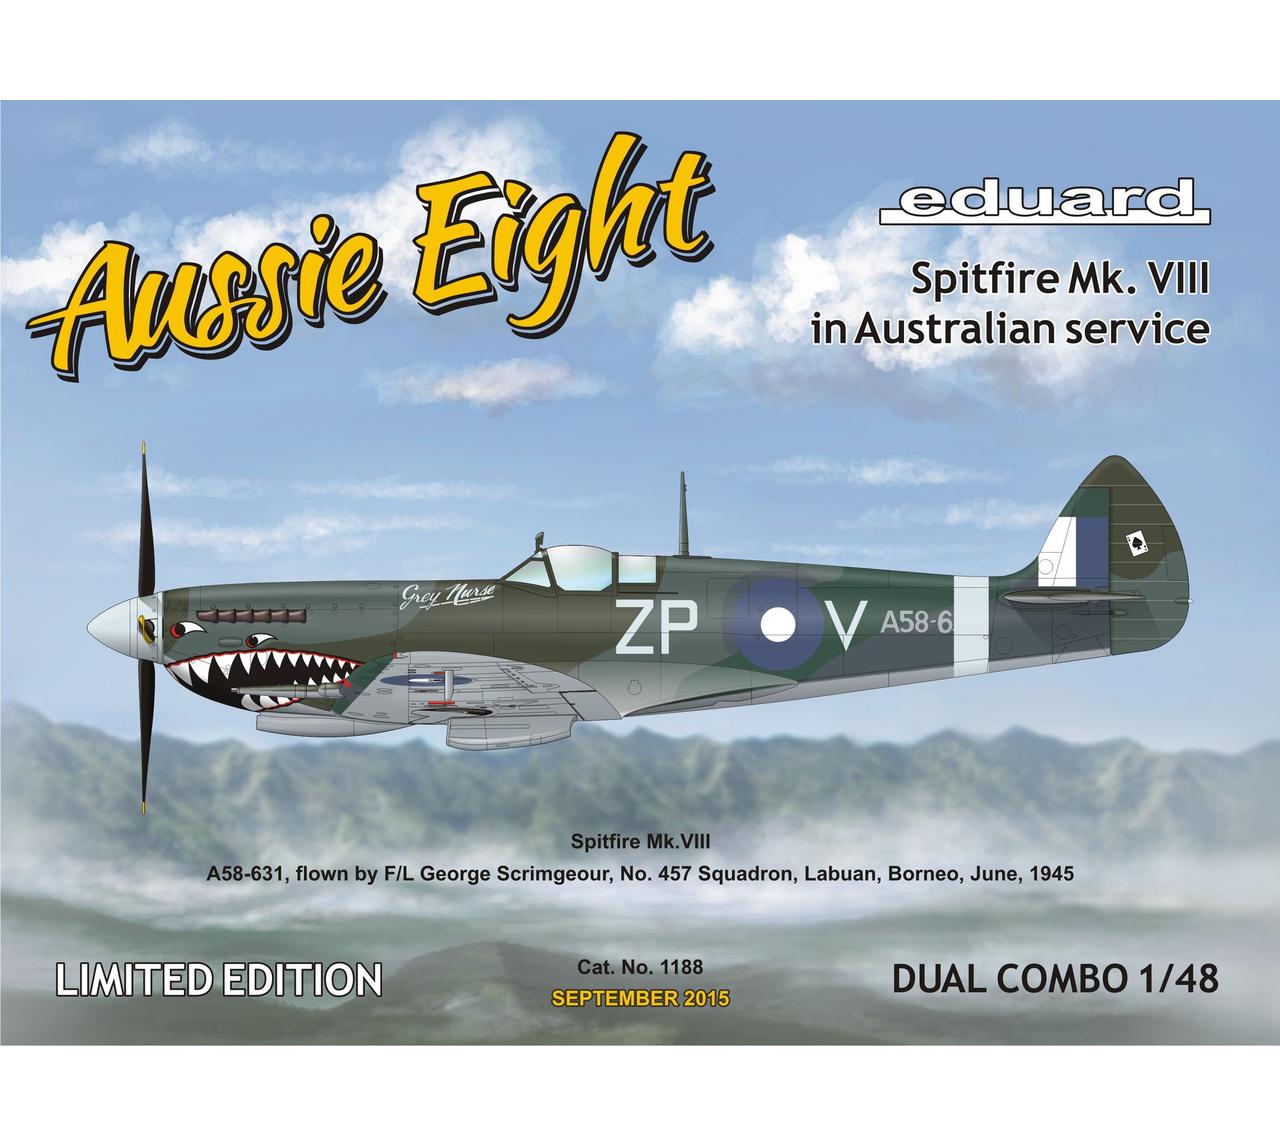 Eduard Spitfire-kavalkad, Aussie Eight #1 klar, Aussie Eight #2 NY!, Bonus: Airfix Spitfire XII - Sida 12 06